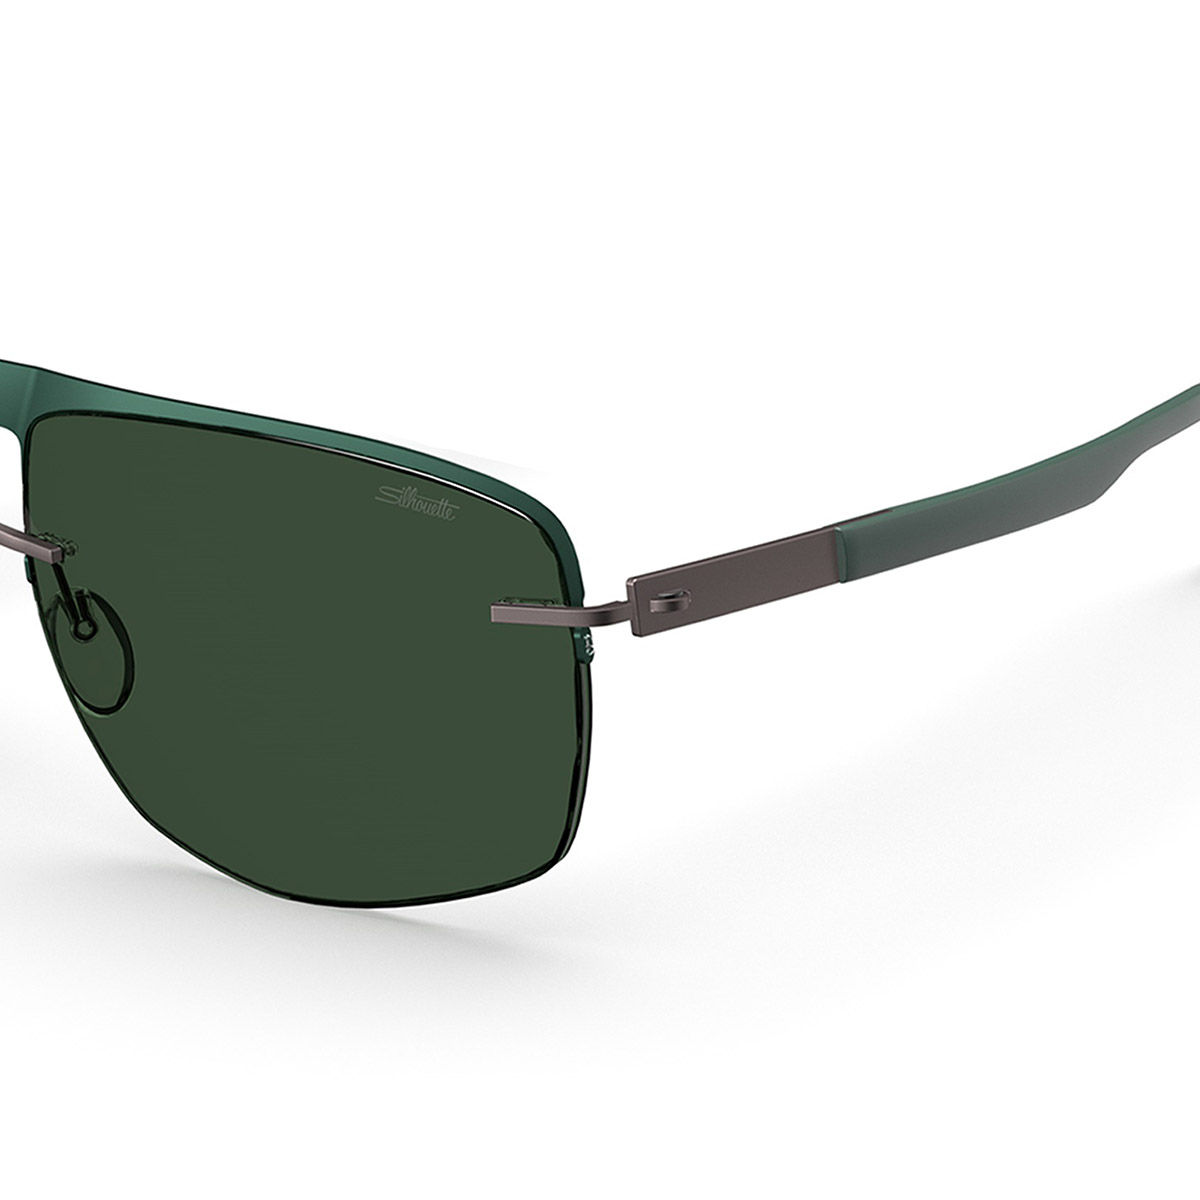 Samba Shades Miami Classic Round Wayfarer Sunglasses with Rubber Green  Frame, Green Mirror Lens